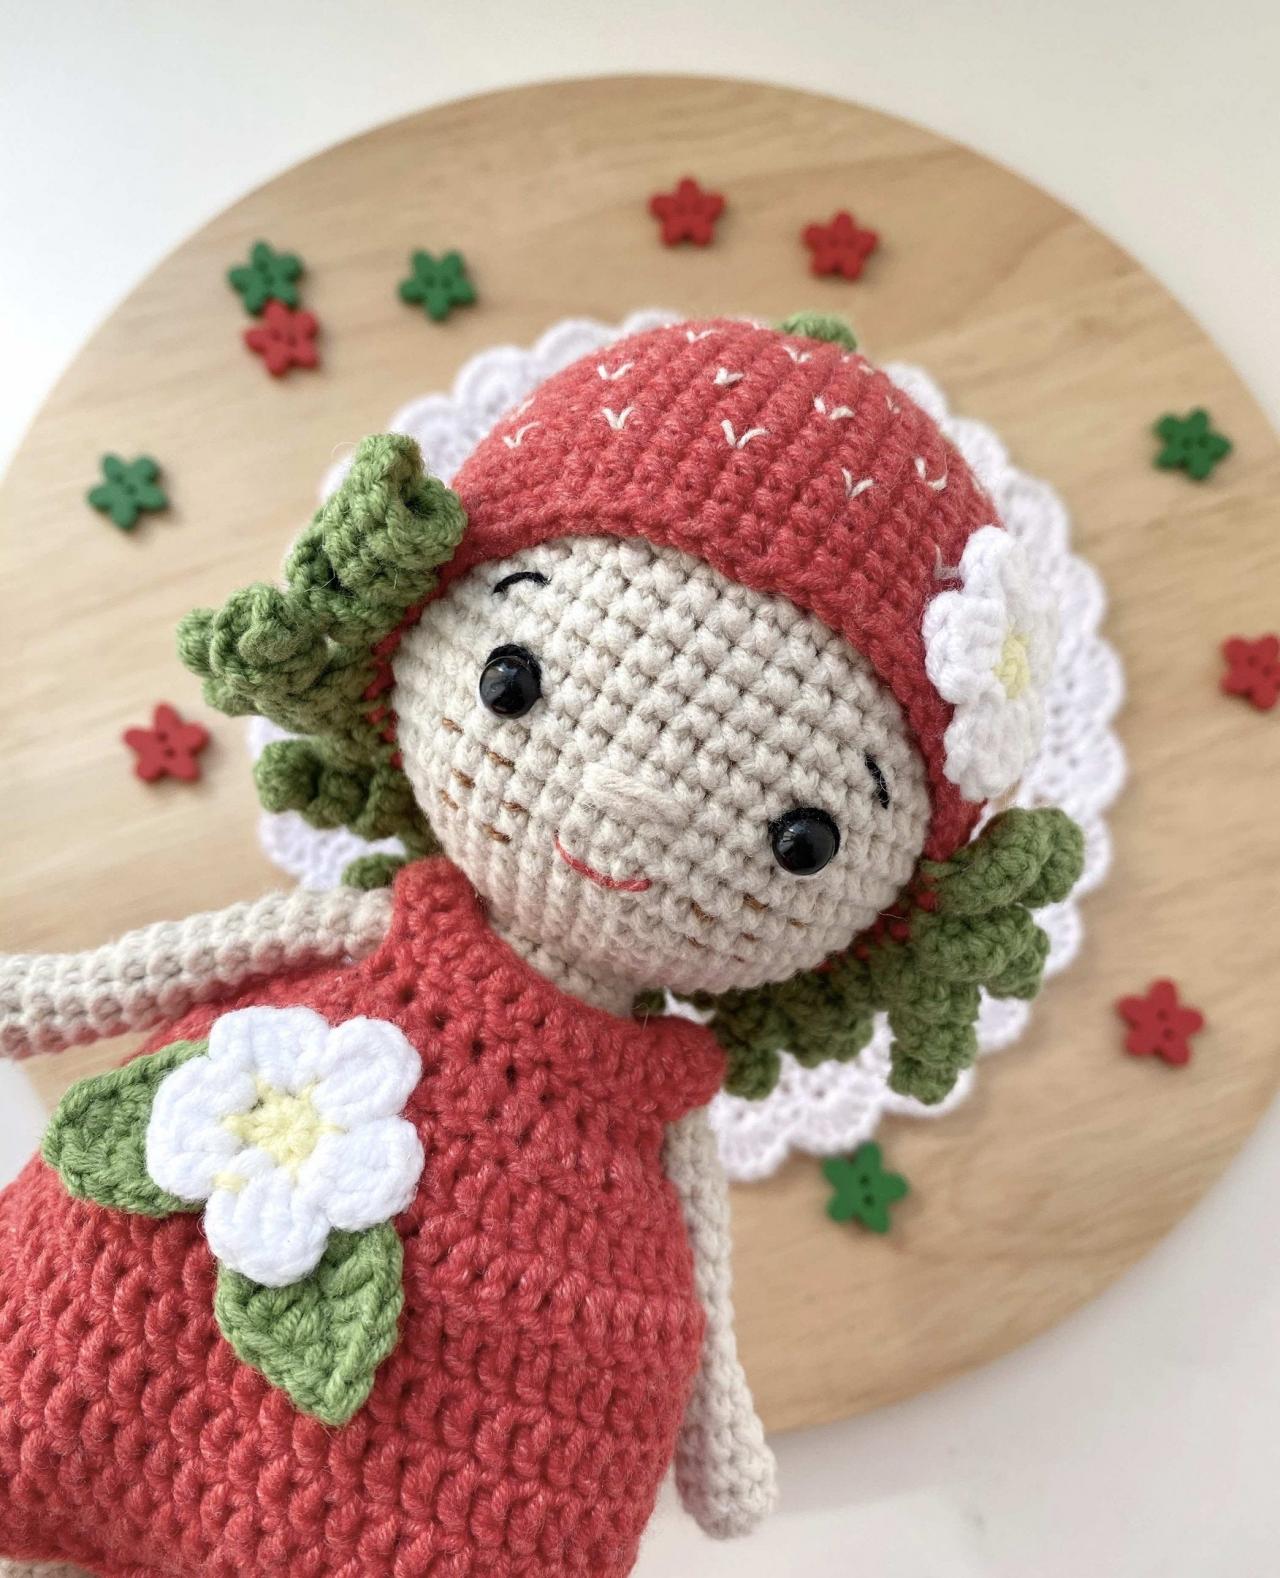 PATTERN Strawberry crochet doll Amigurumi doll Amigurumi plush pattern Crochet toy pattern Kawaii crochet gift Crochet plant Crochet berry